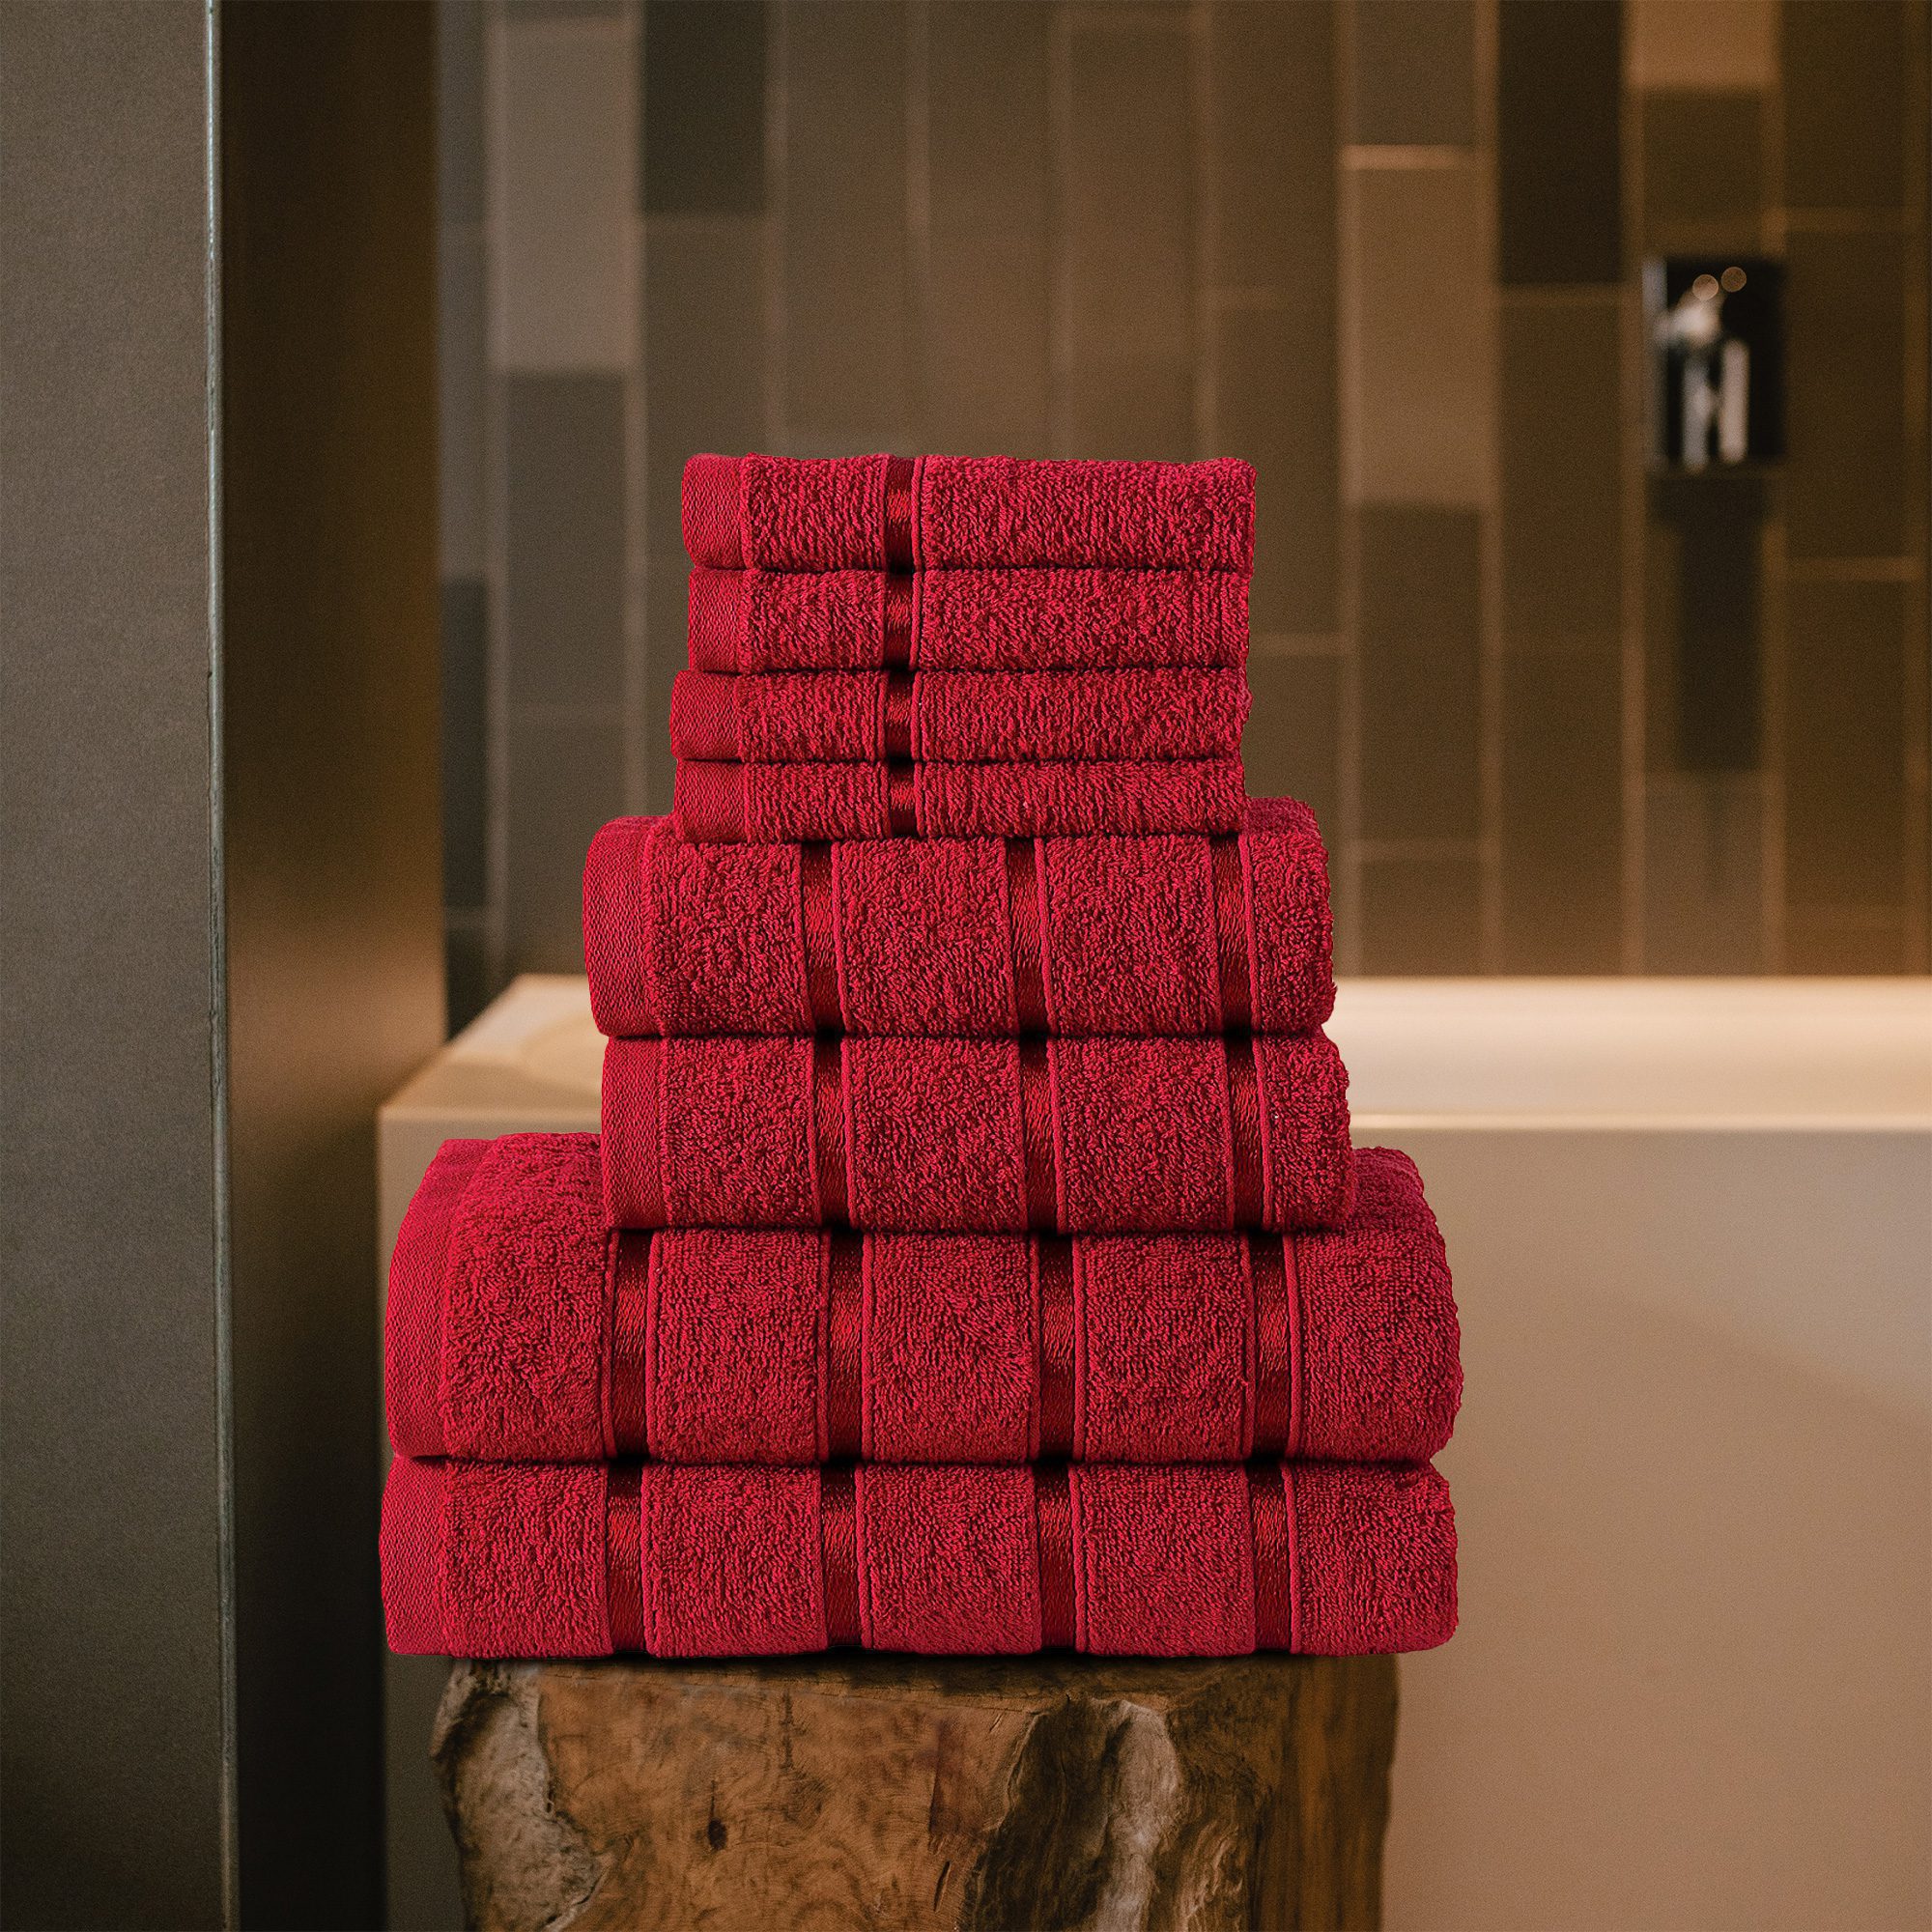 8 Piece Towel Set Soft Bath Hand Towels Super Absorbent Face